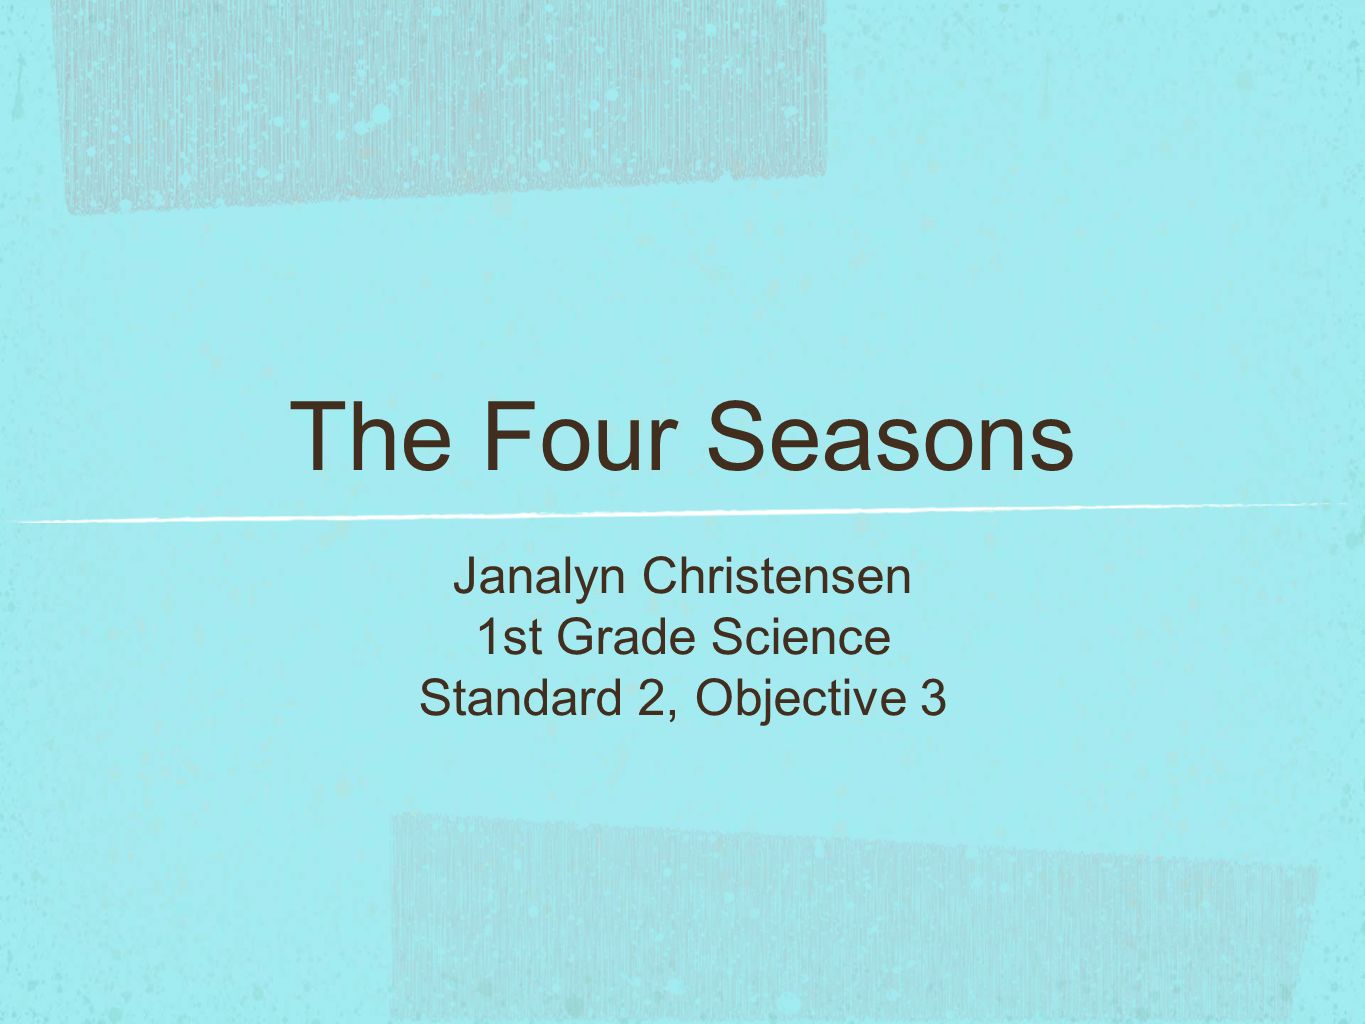 The Four Seasons Janalyn Christensen 1st Grade Science Standard 2, Objective 3